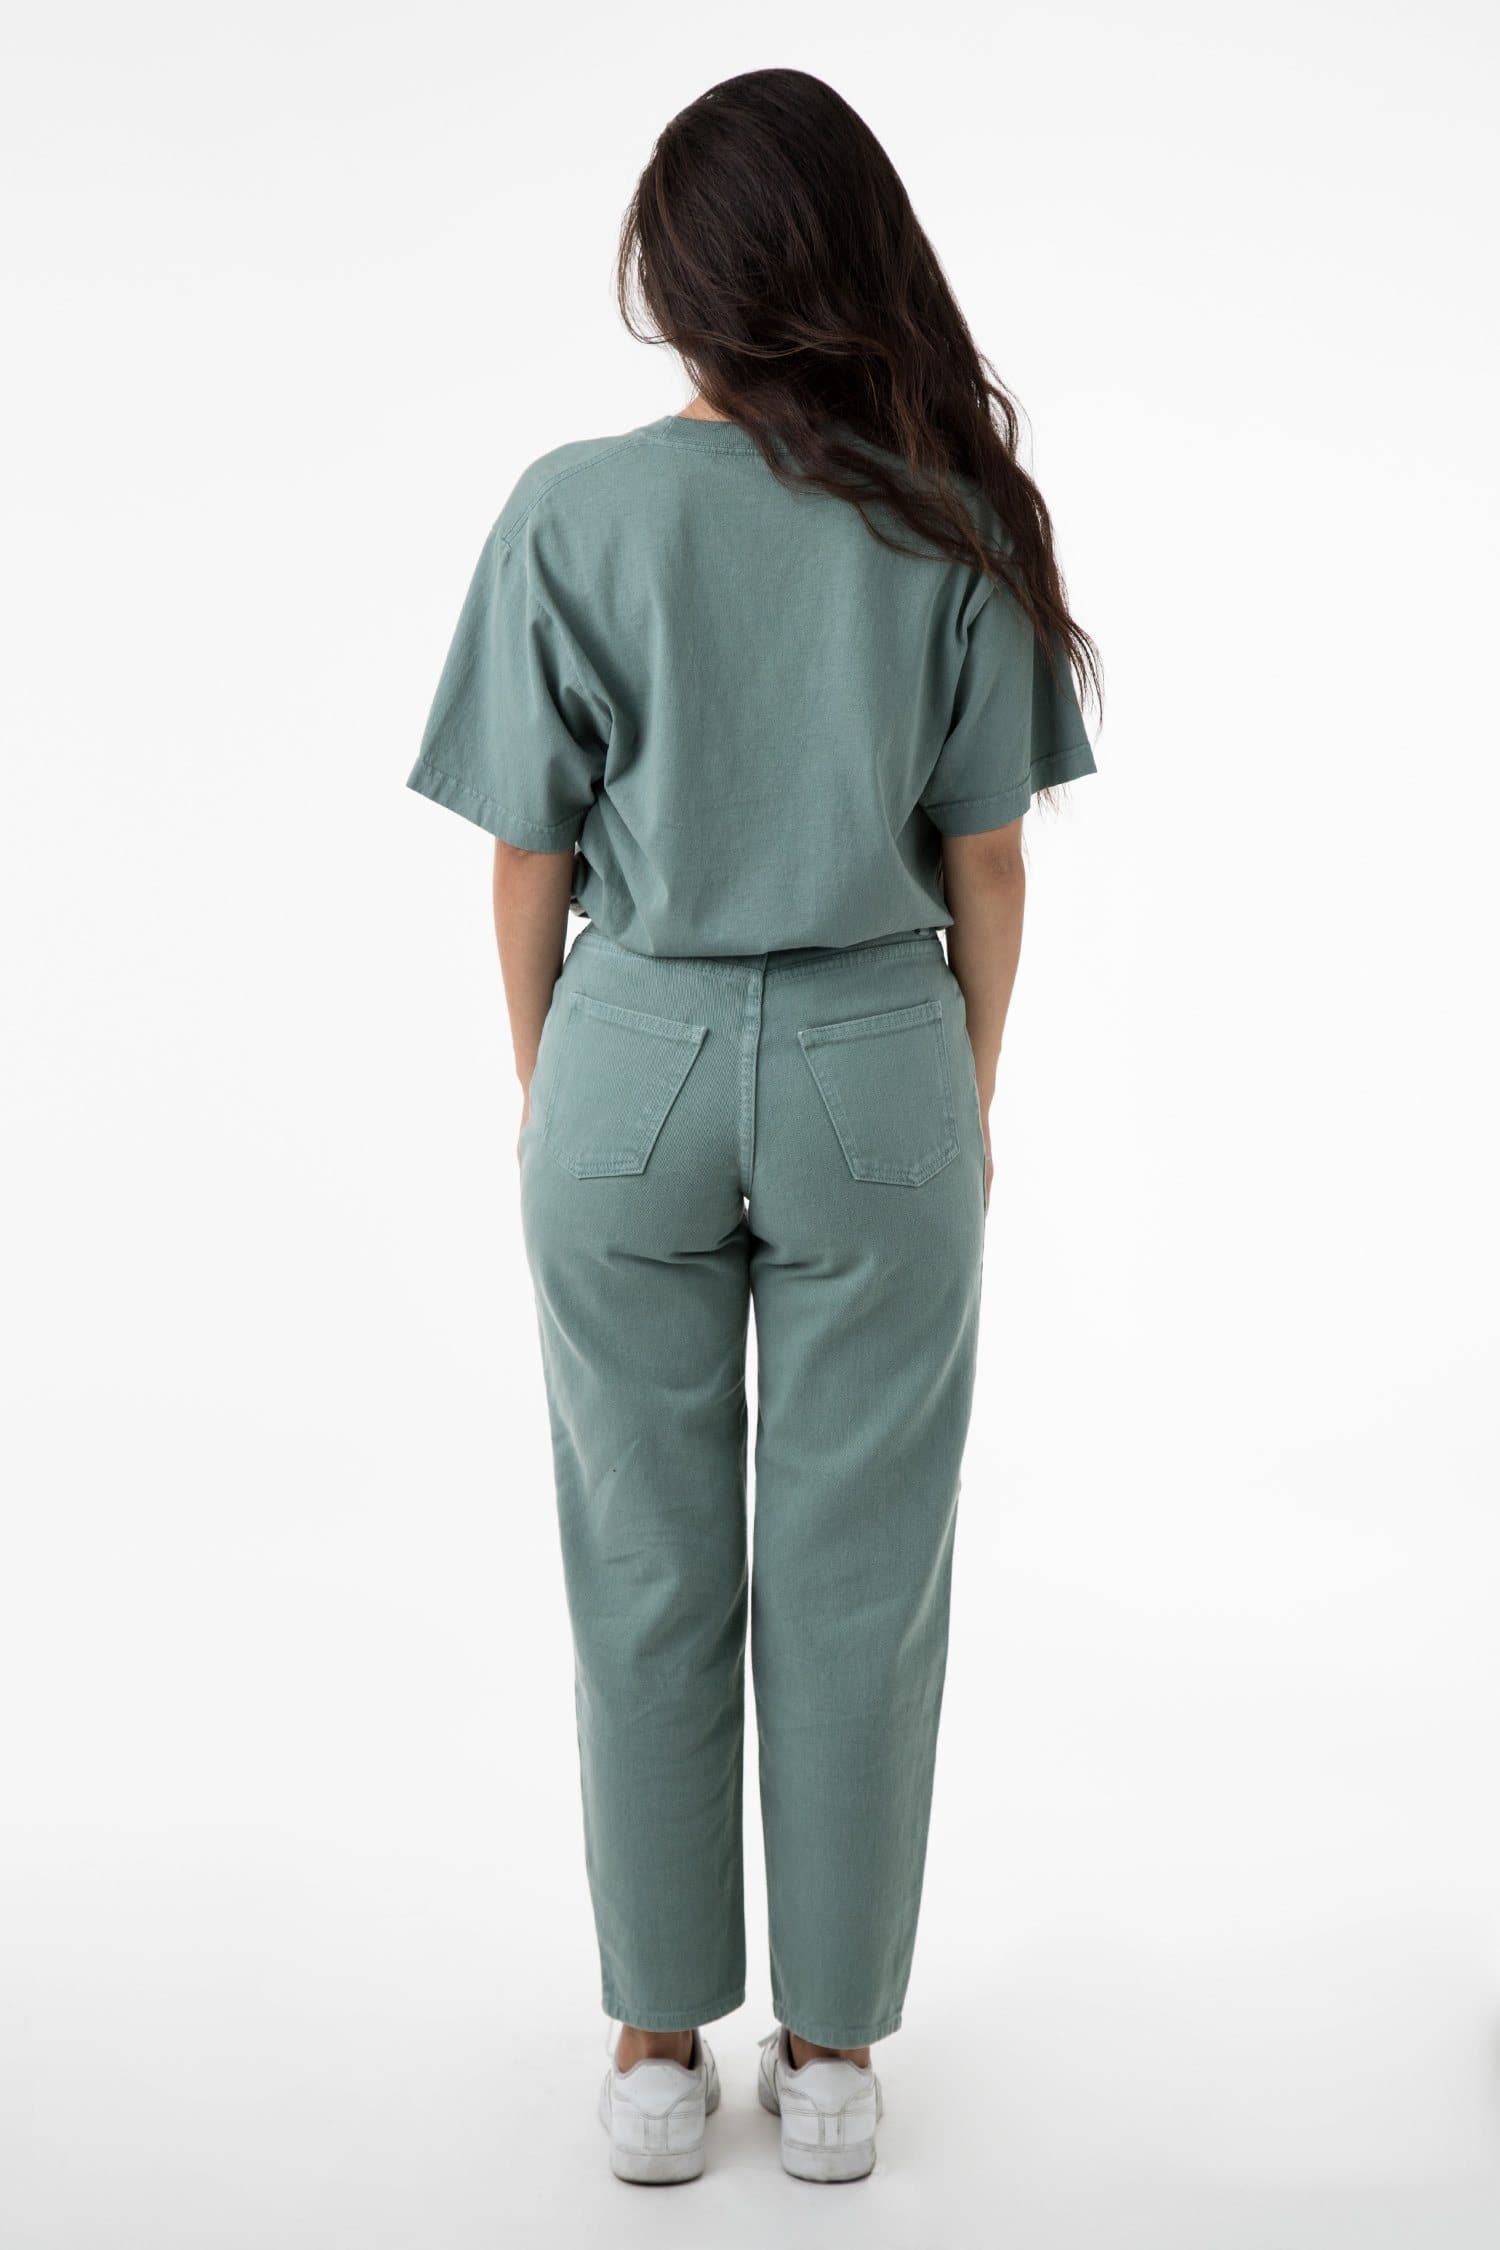 RBDW01GD - Garment Dye Women's Relaxed Fit Bull Denim Jean